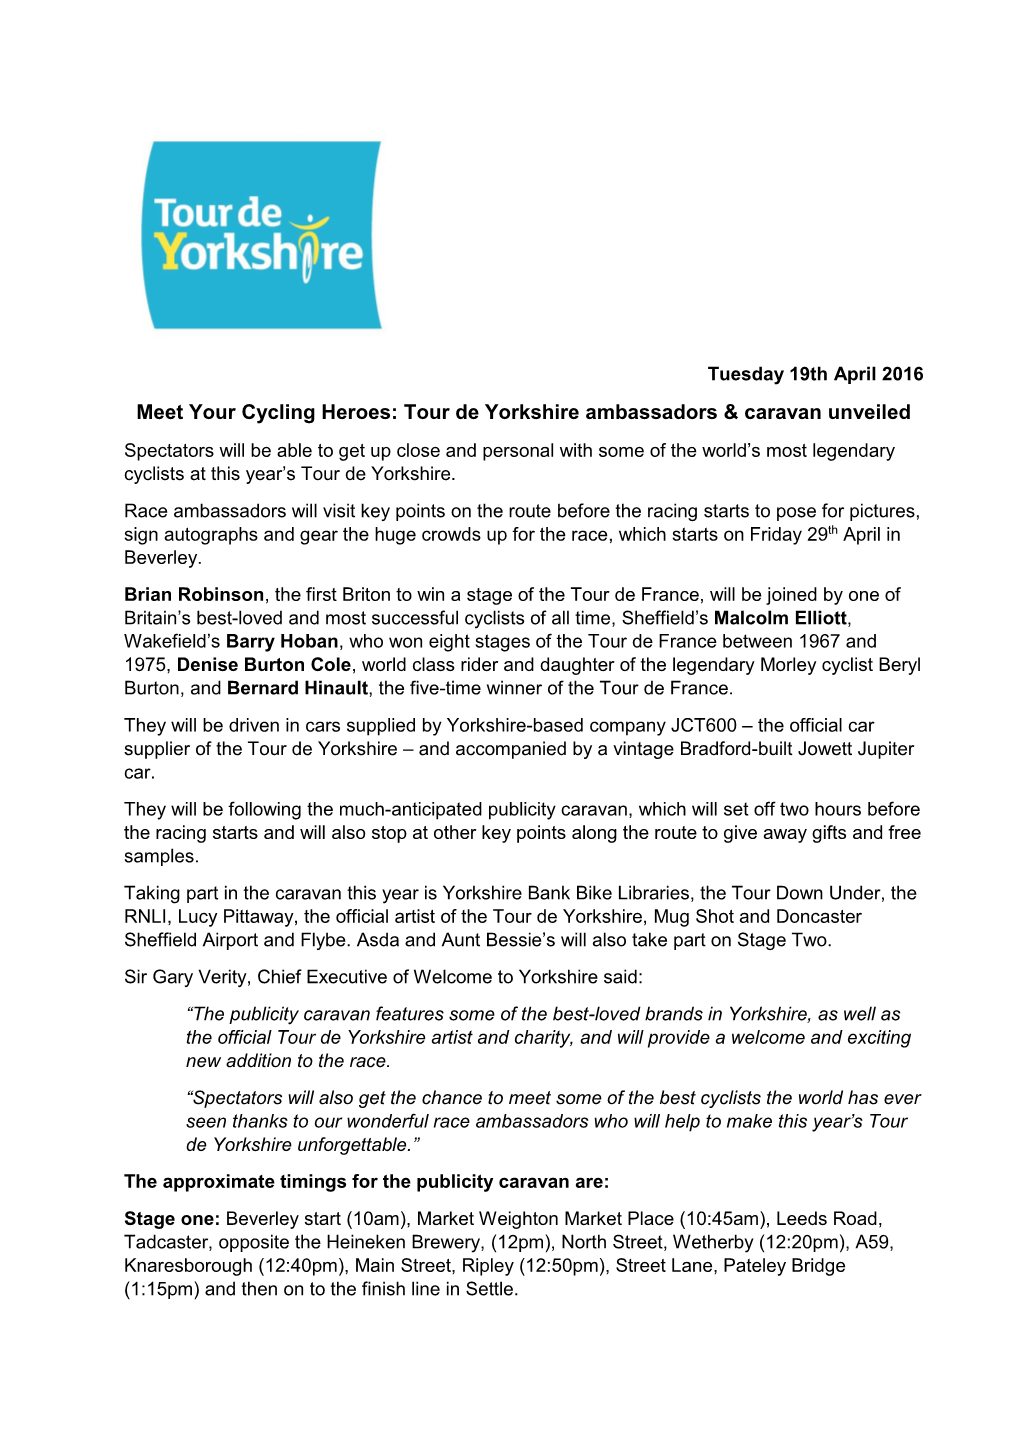 Meet Your Cycling Heroes: Tour De Yorkshire Ambassadors & Caravan